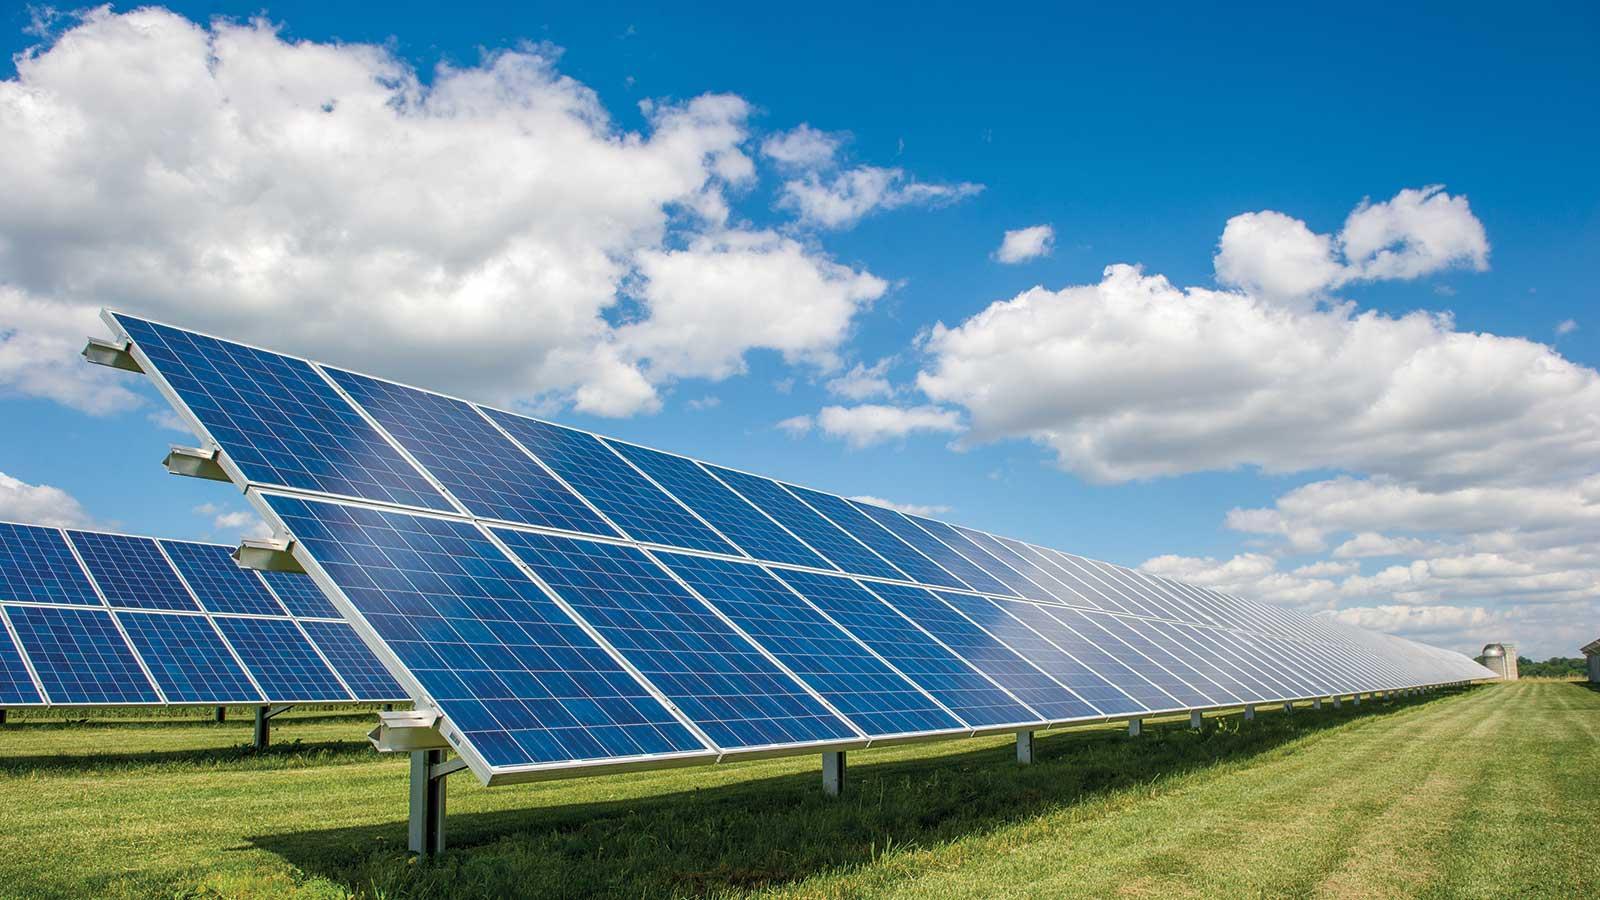 Solar panels on agricultural land